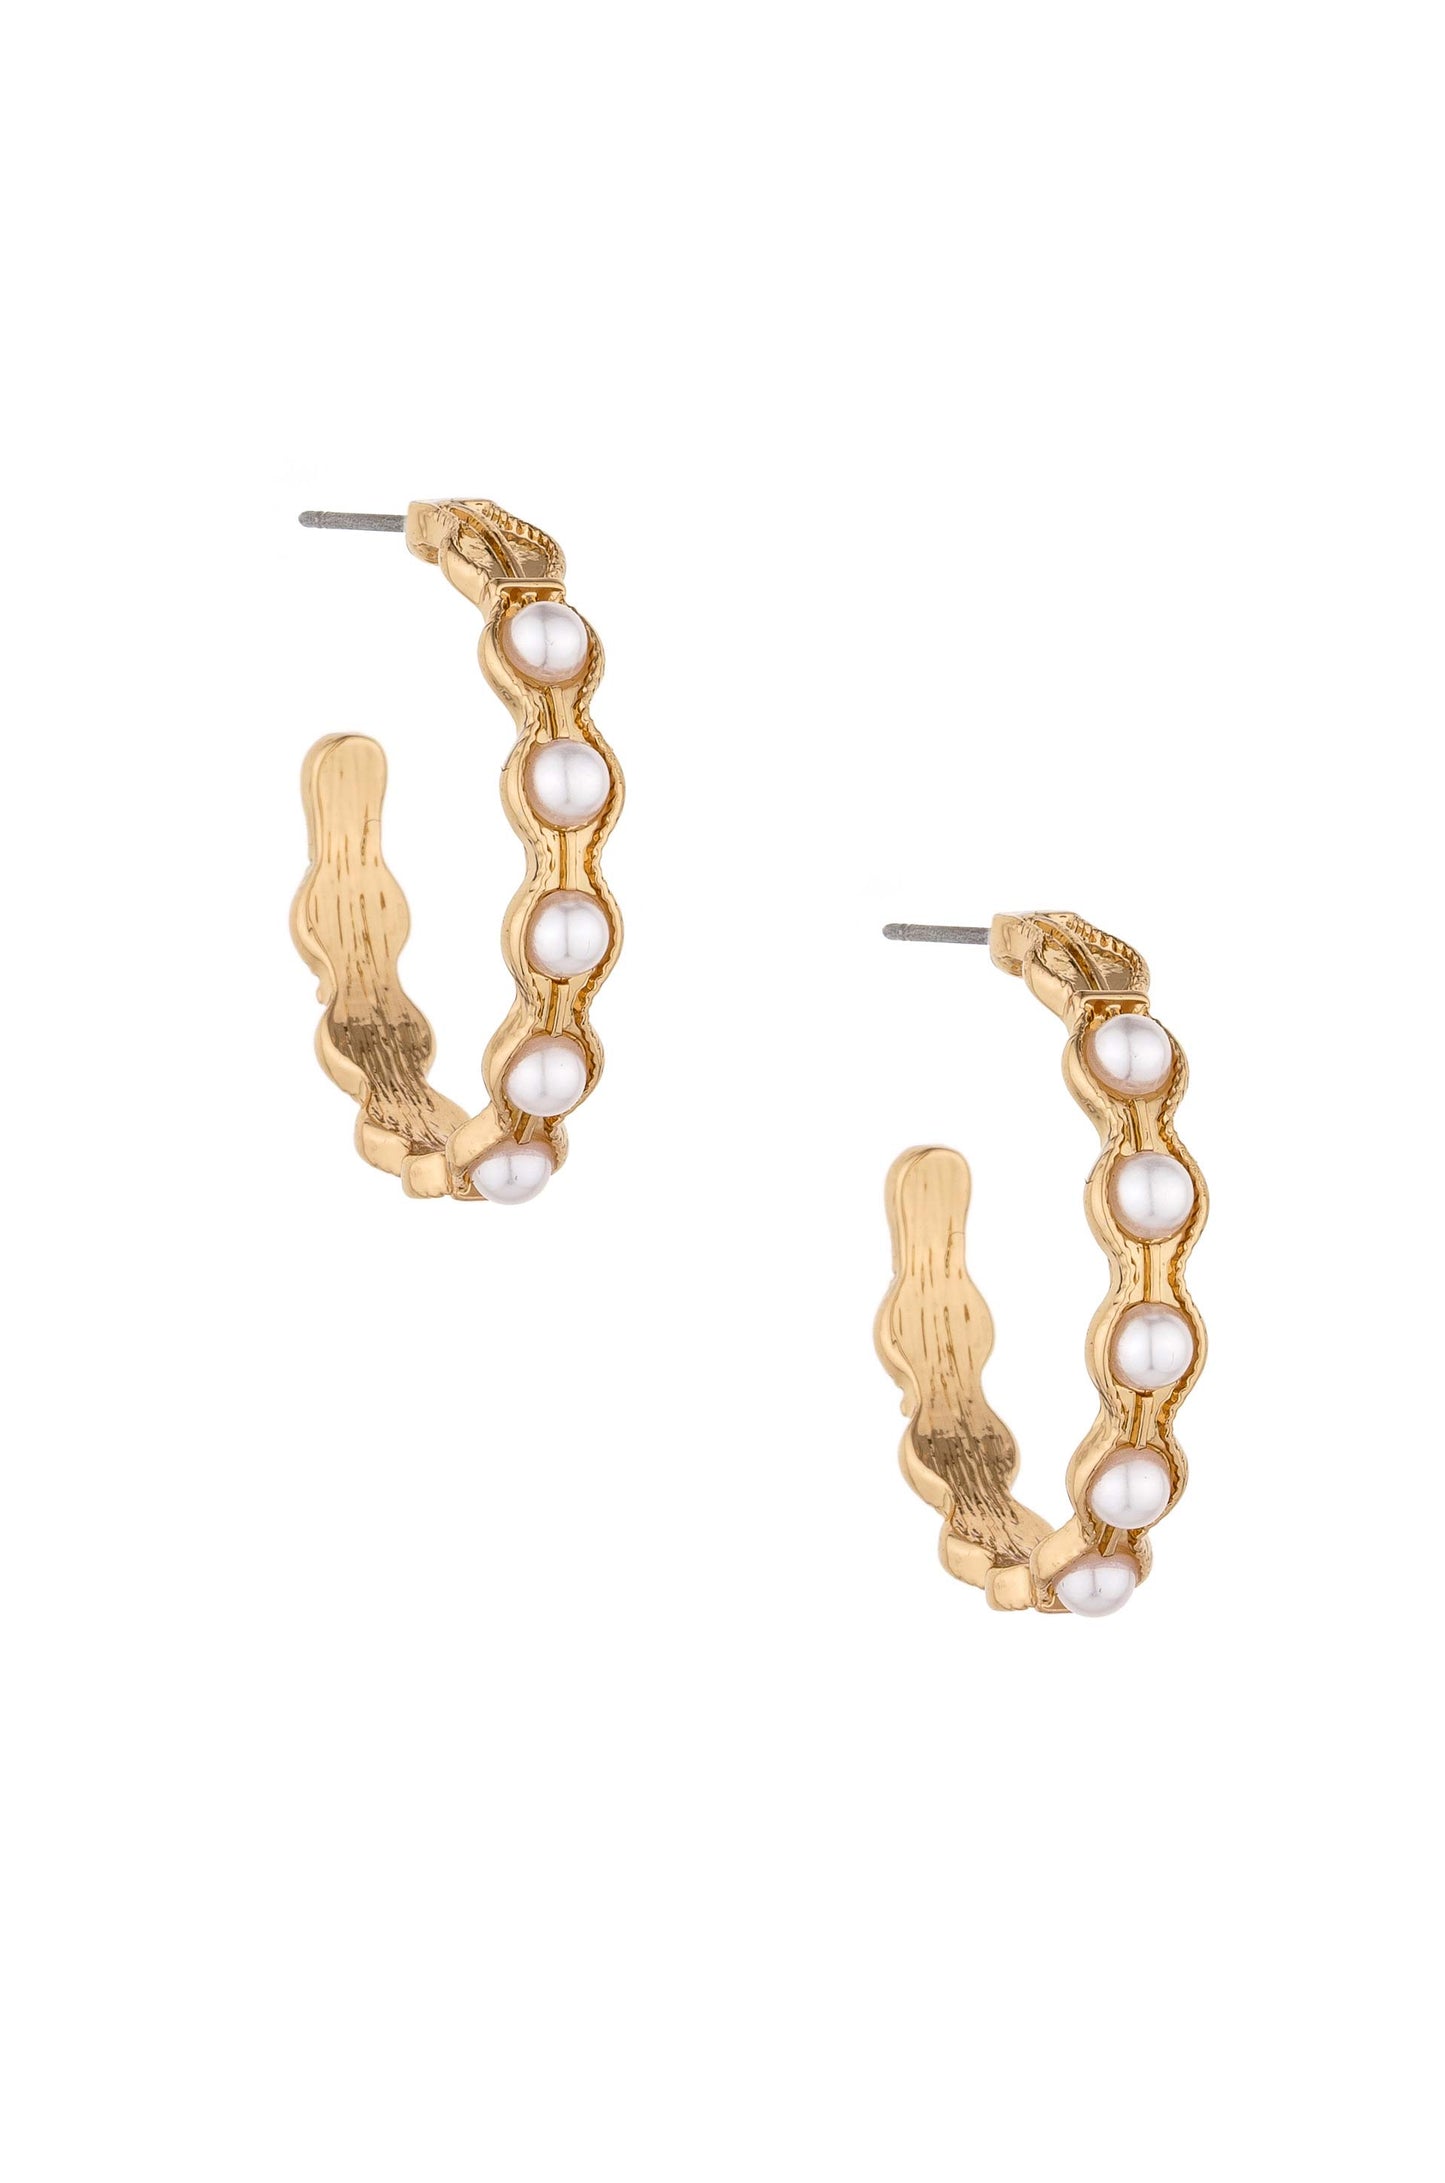 Pretty Pearls 18k Gold Plated Hoop Earrings on white